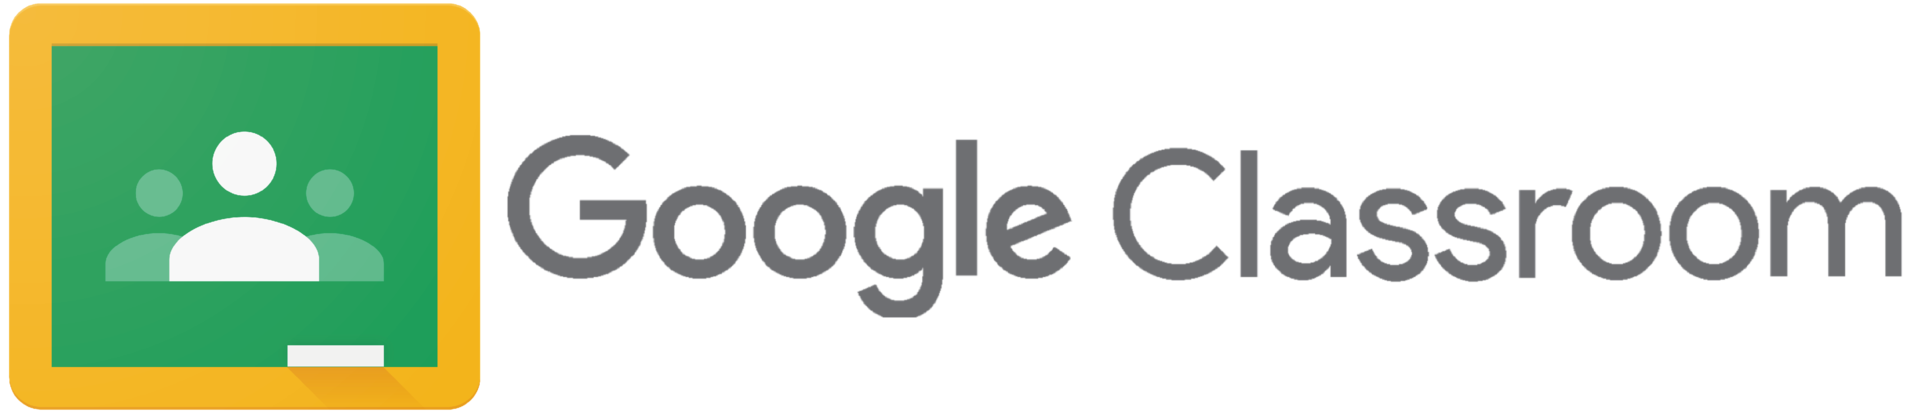 Гугл классрум. Классрум логотип. Google Classroom лого. Google Classroom logo PNG. Google classroom